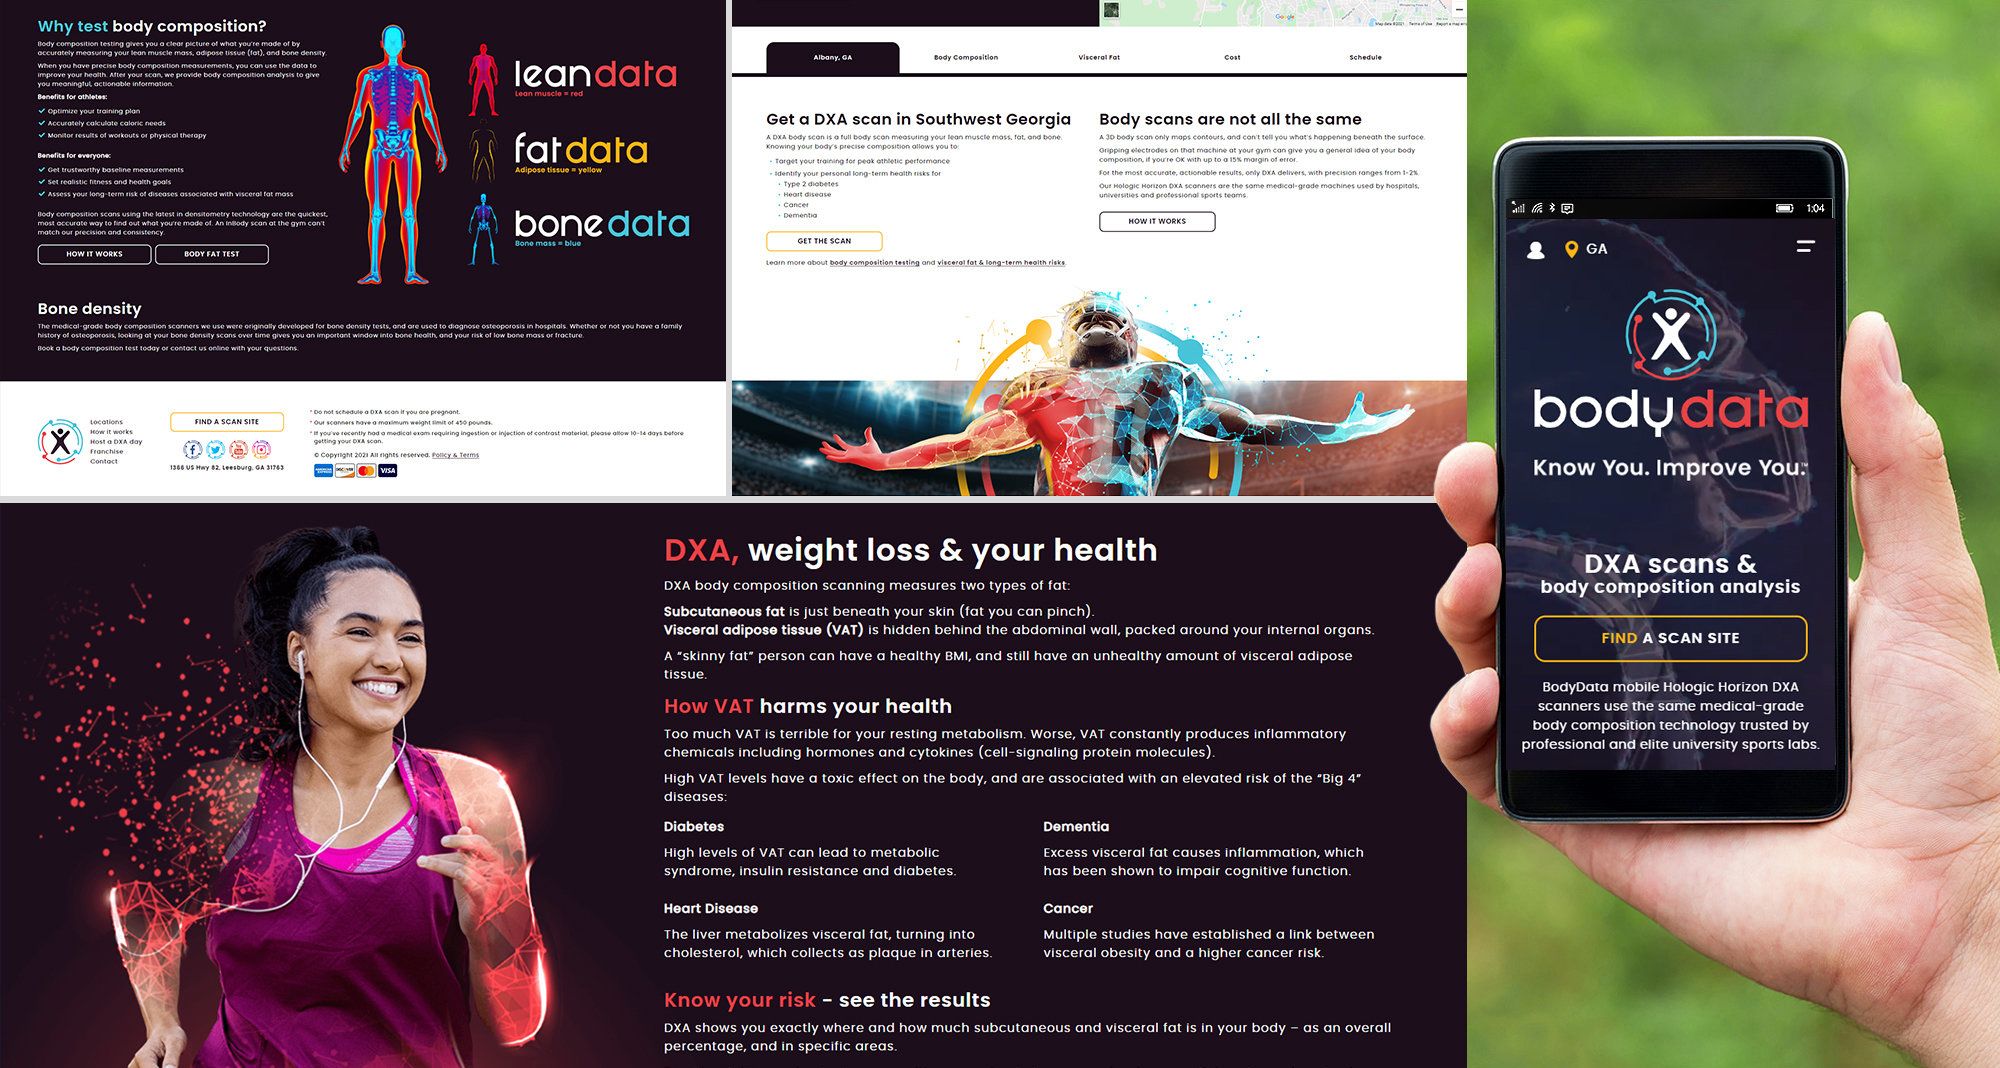 Milwaukee web marketing for Body Data